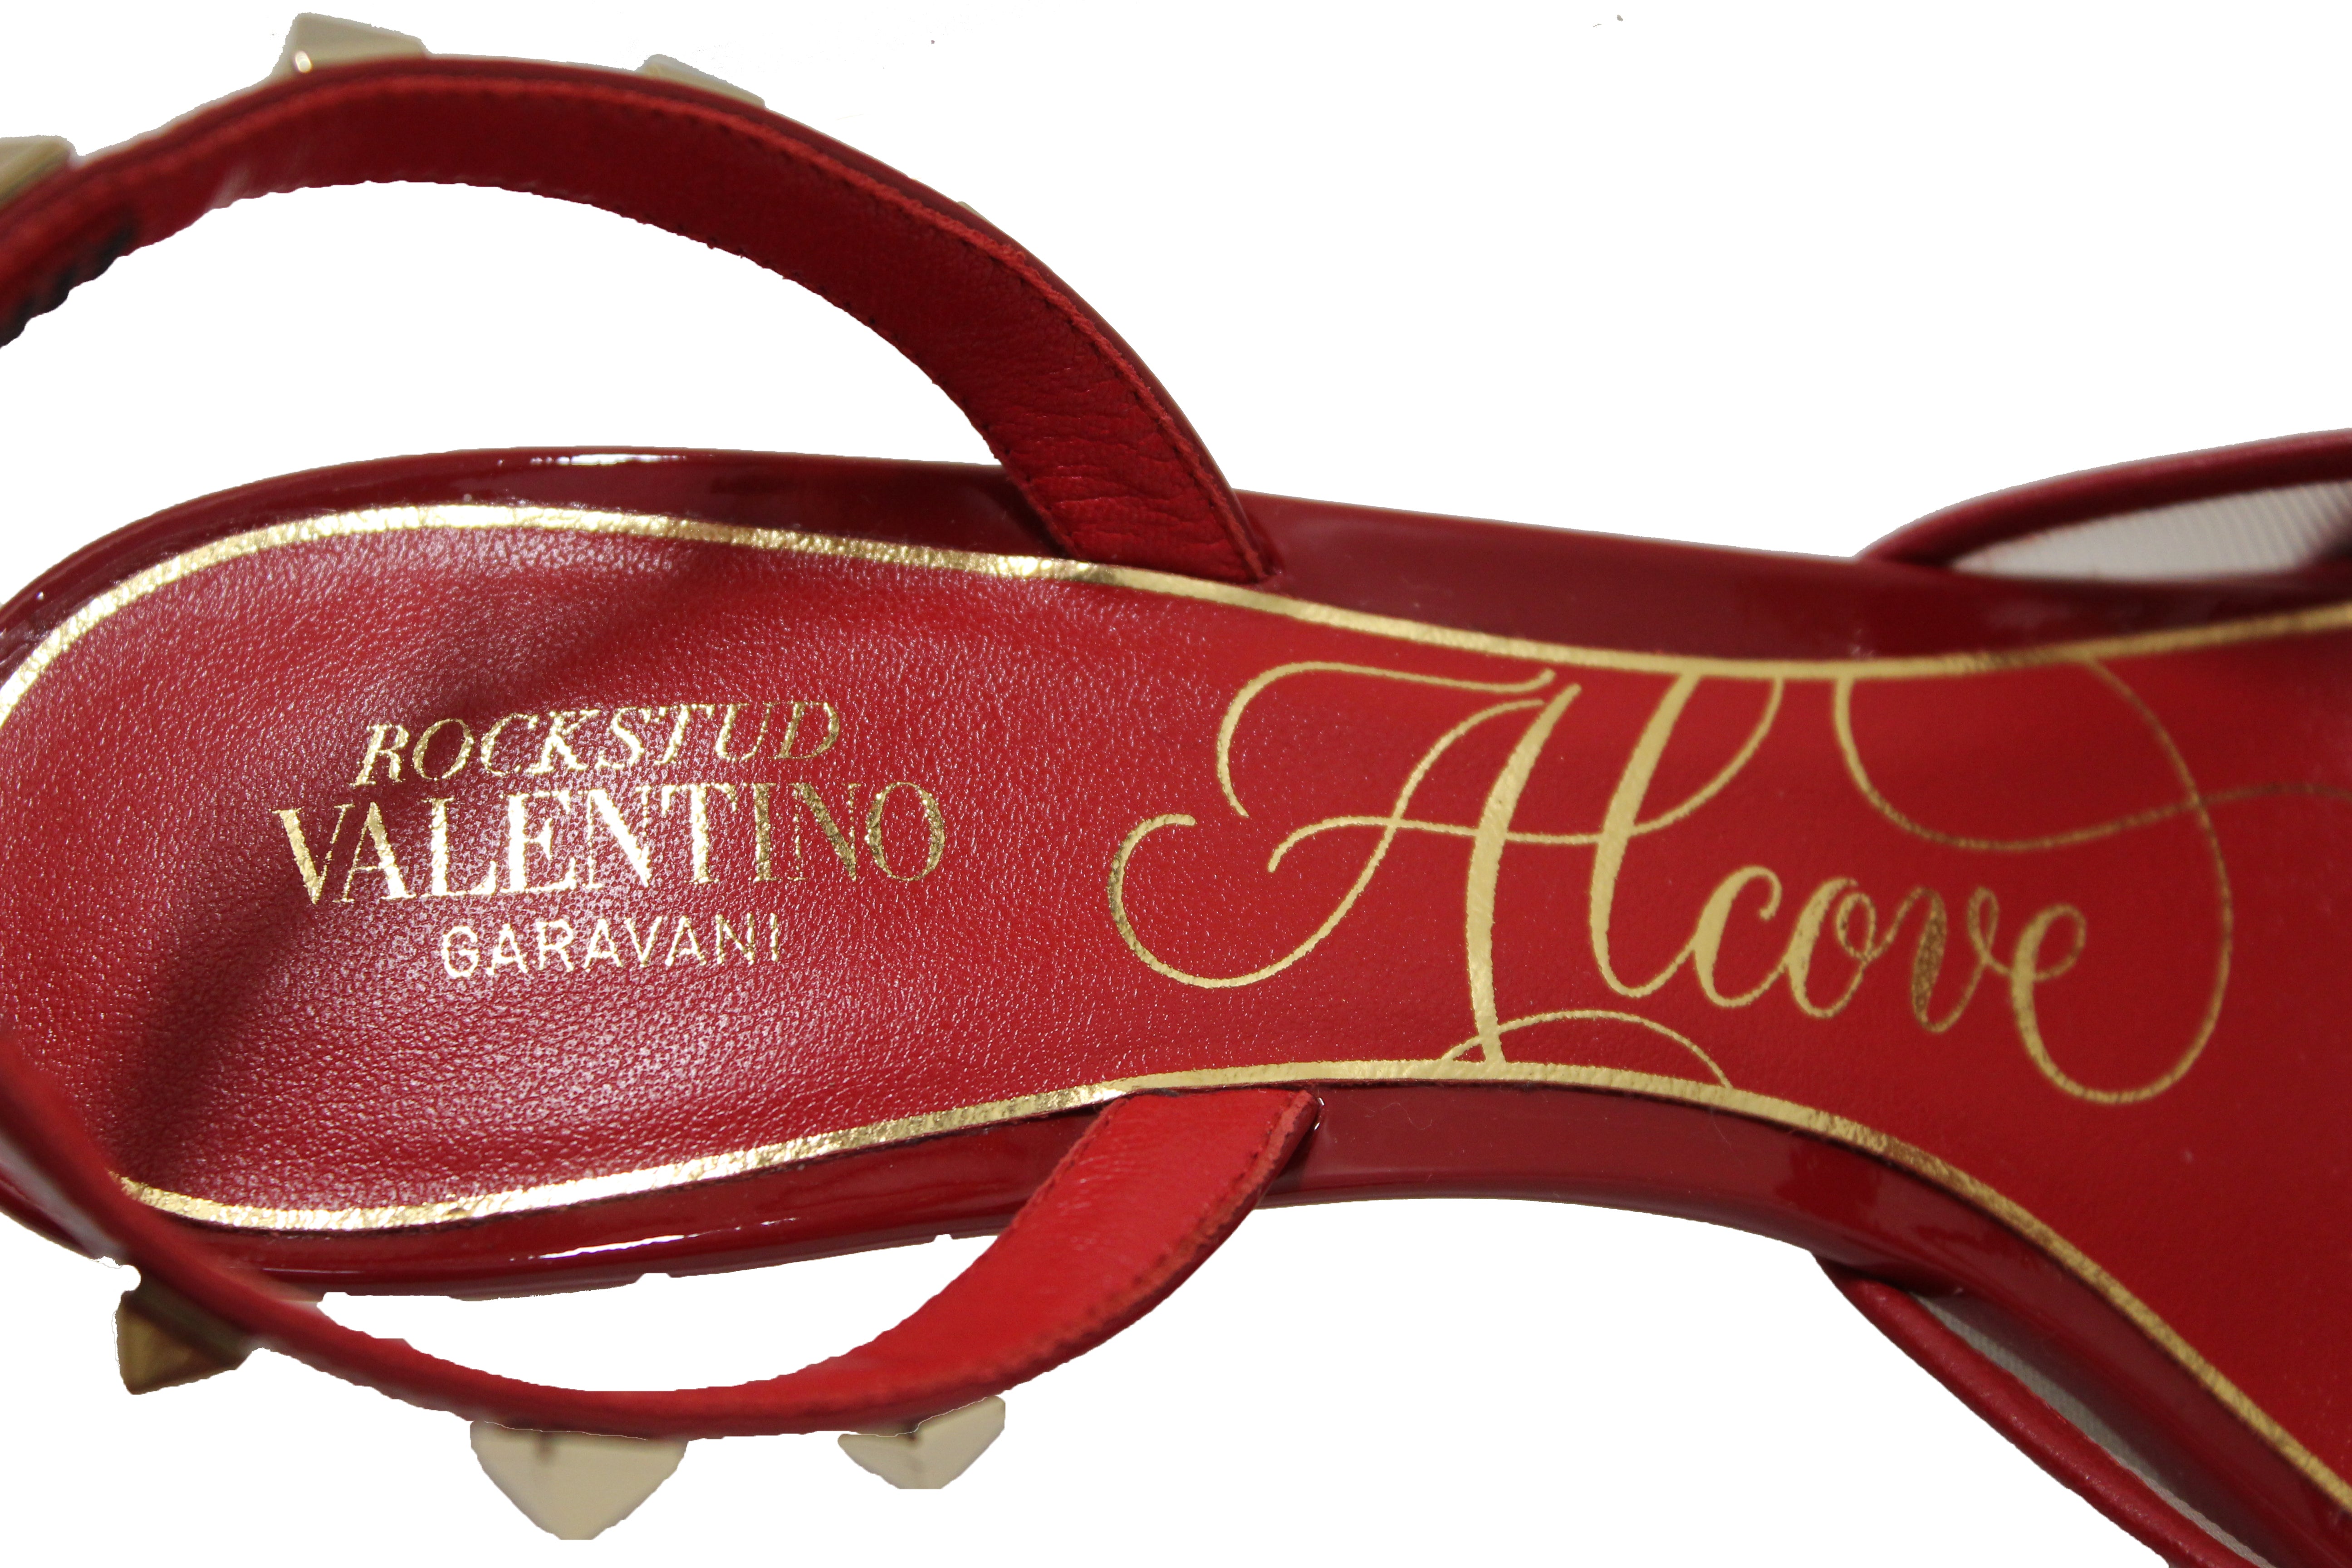 Authentic Valentino Garavani Rockstud Alcove Red Patent Leather Slingback Pump 60MM Size 7